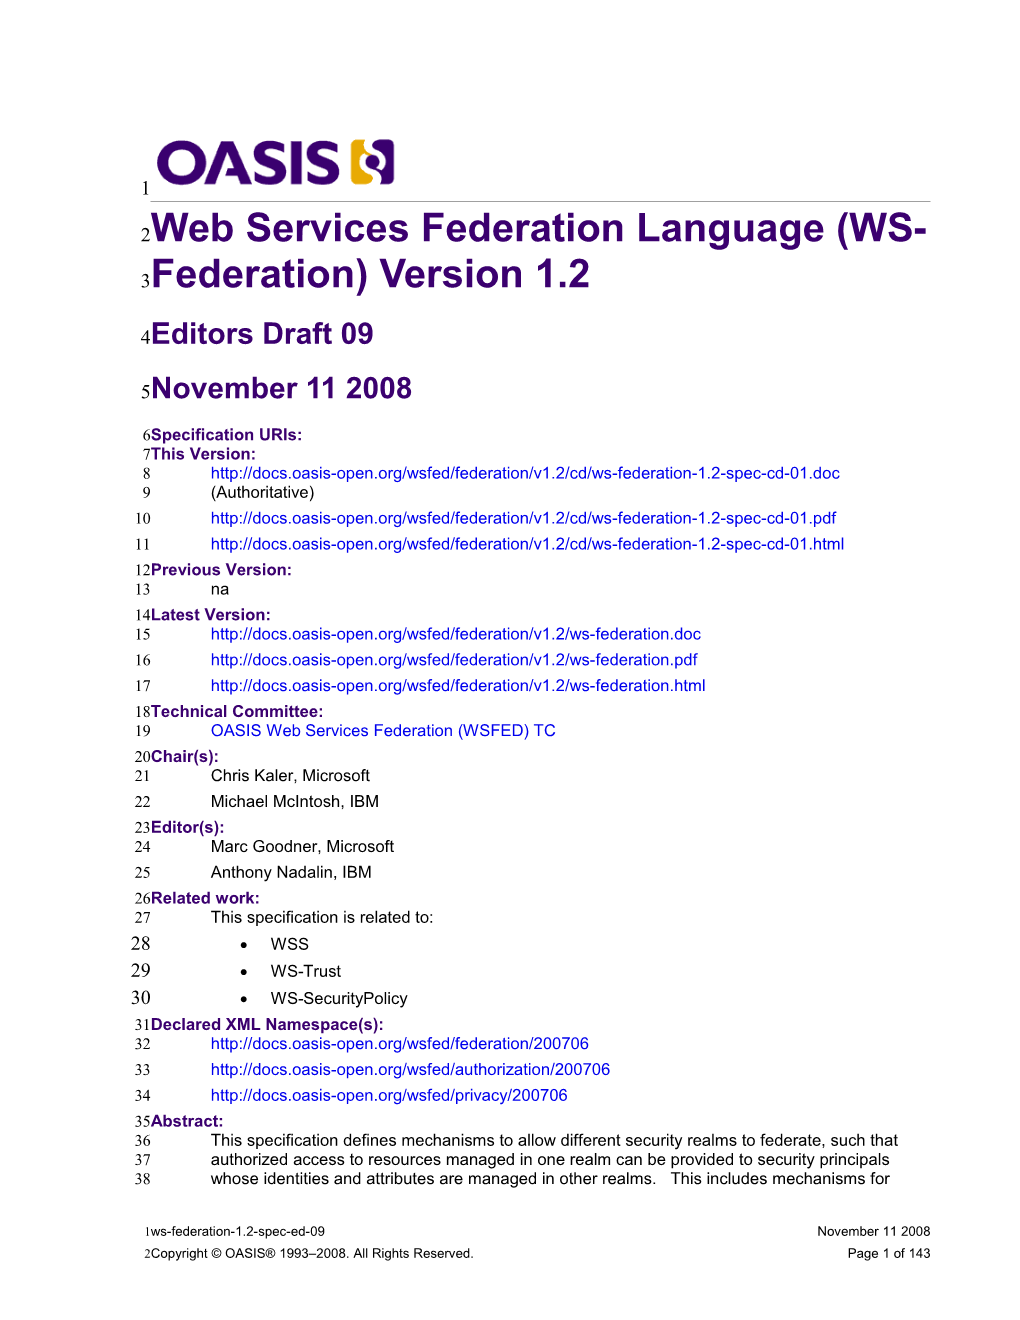 Web Services Federation Language (WS-Federation) Version 1.2